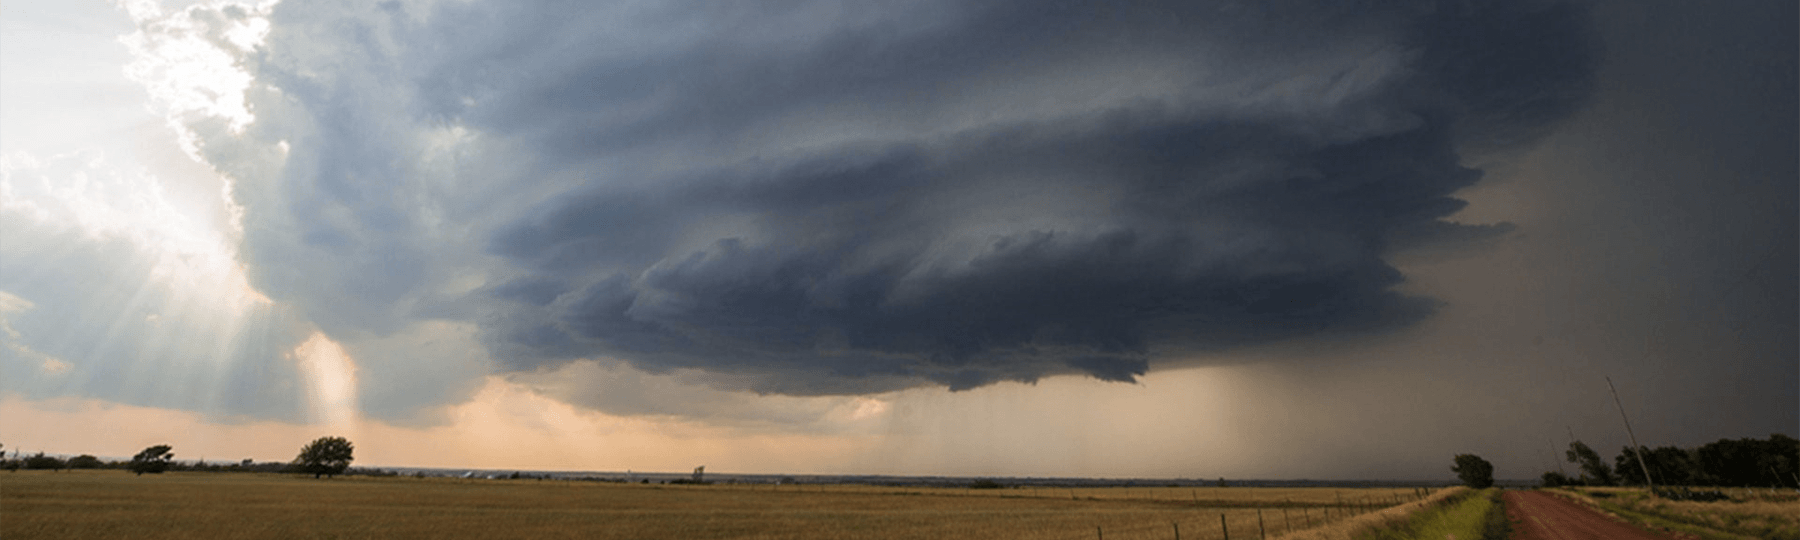 A dark storm cloud spins above a farm field.